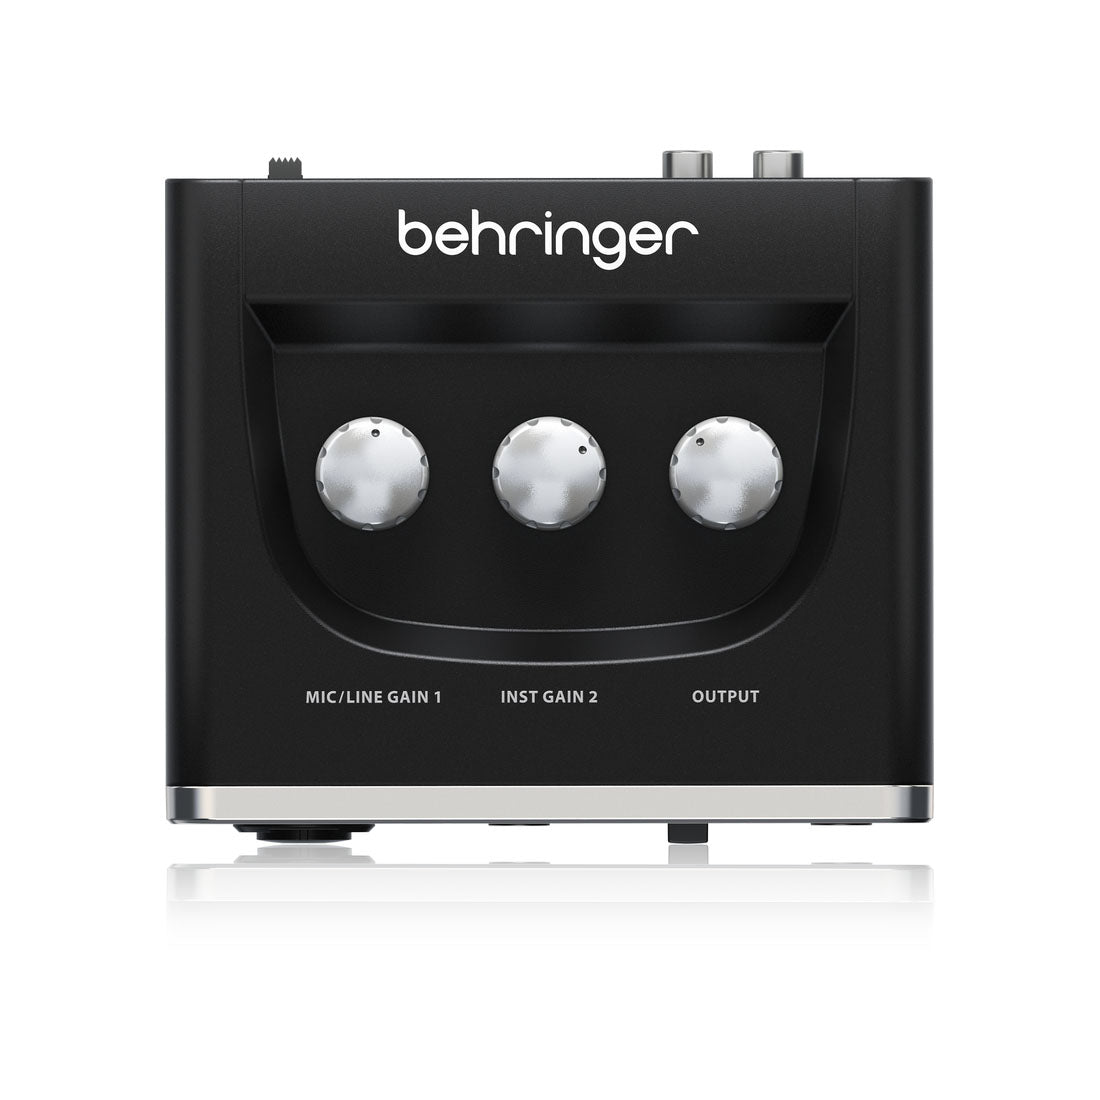 Behringer U-PHORIA UM2 2x2 USB Audio Interface with XENYX Mic Preamplifier